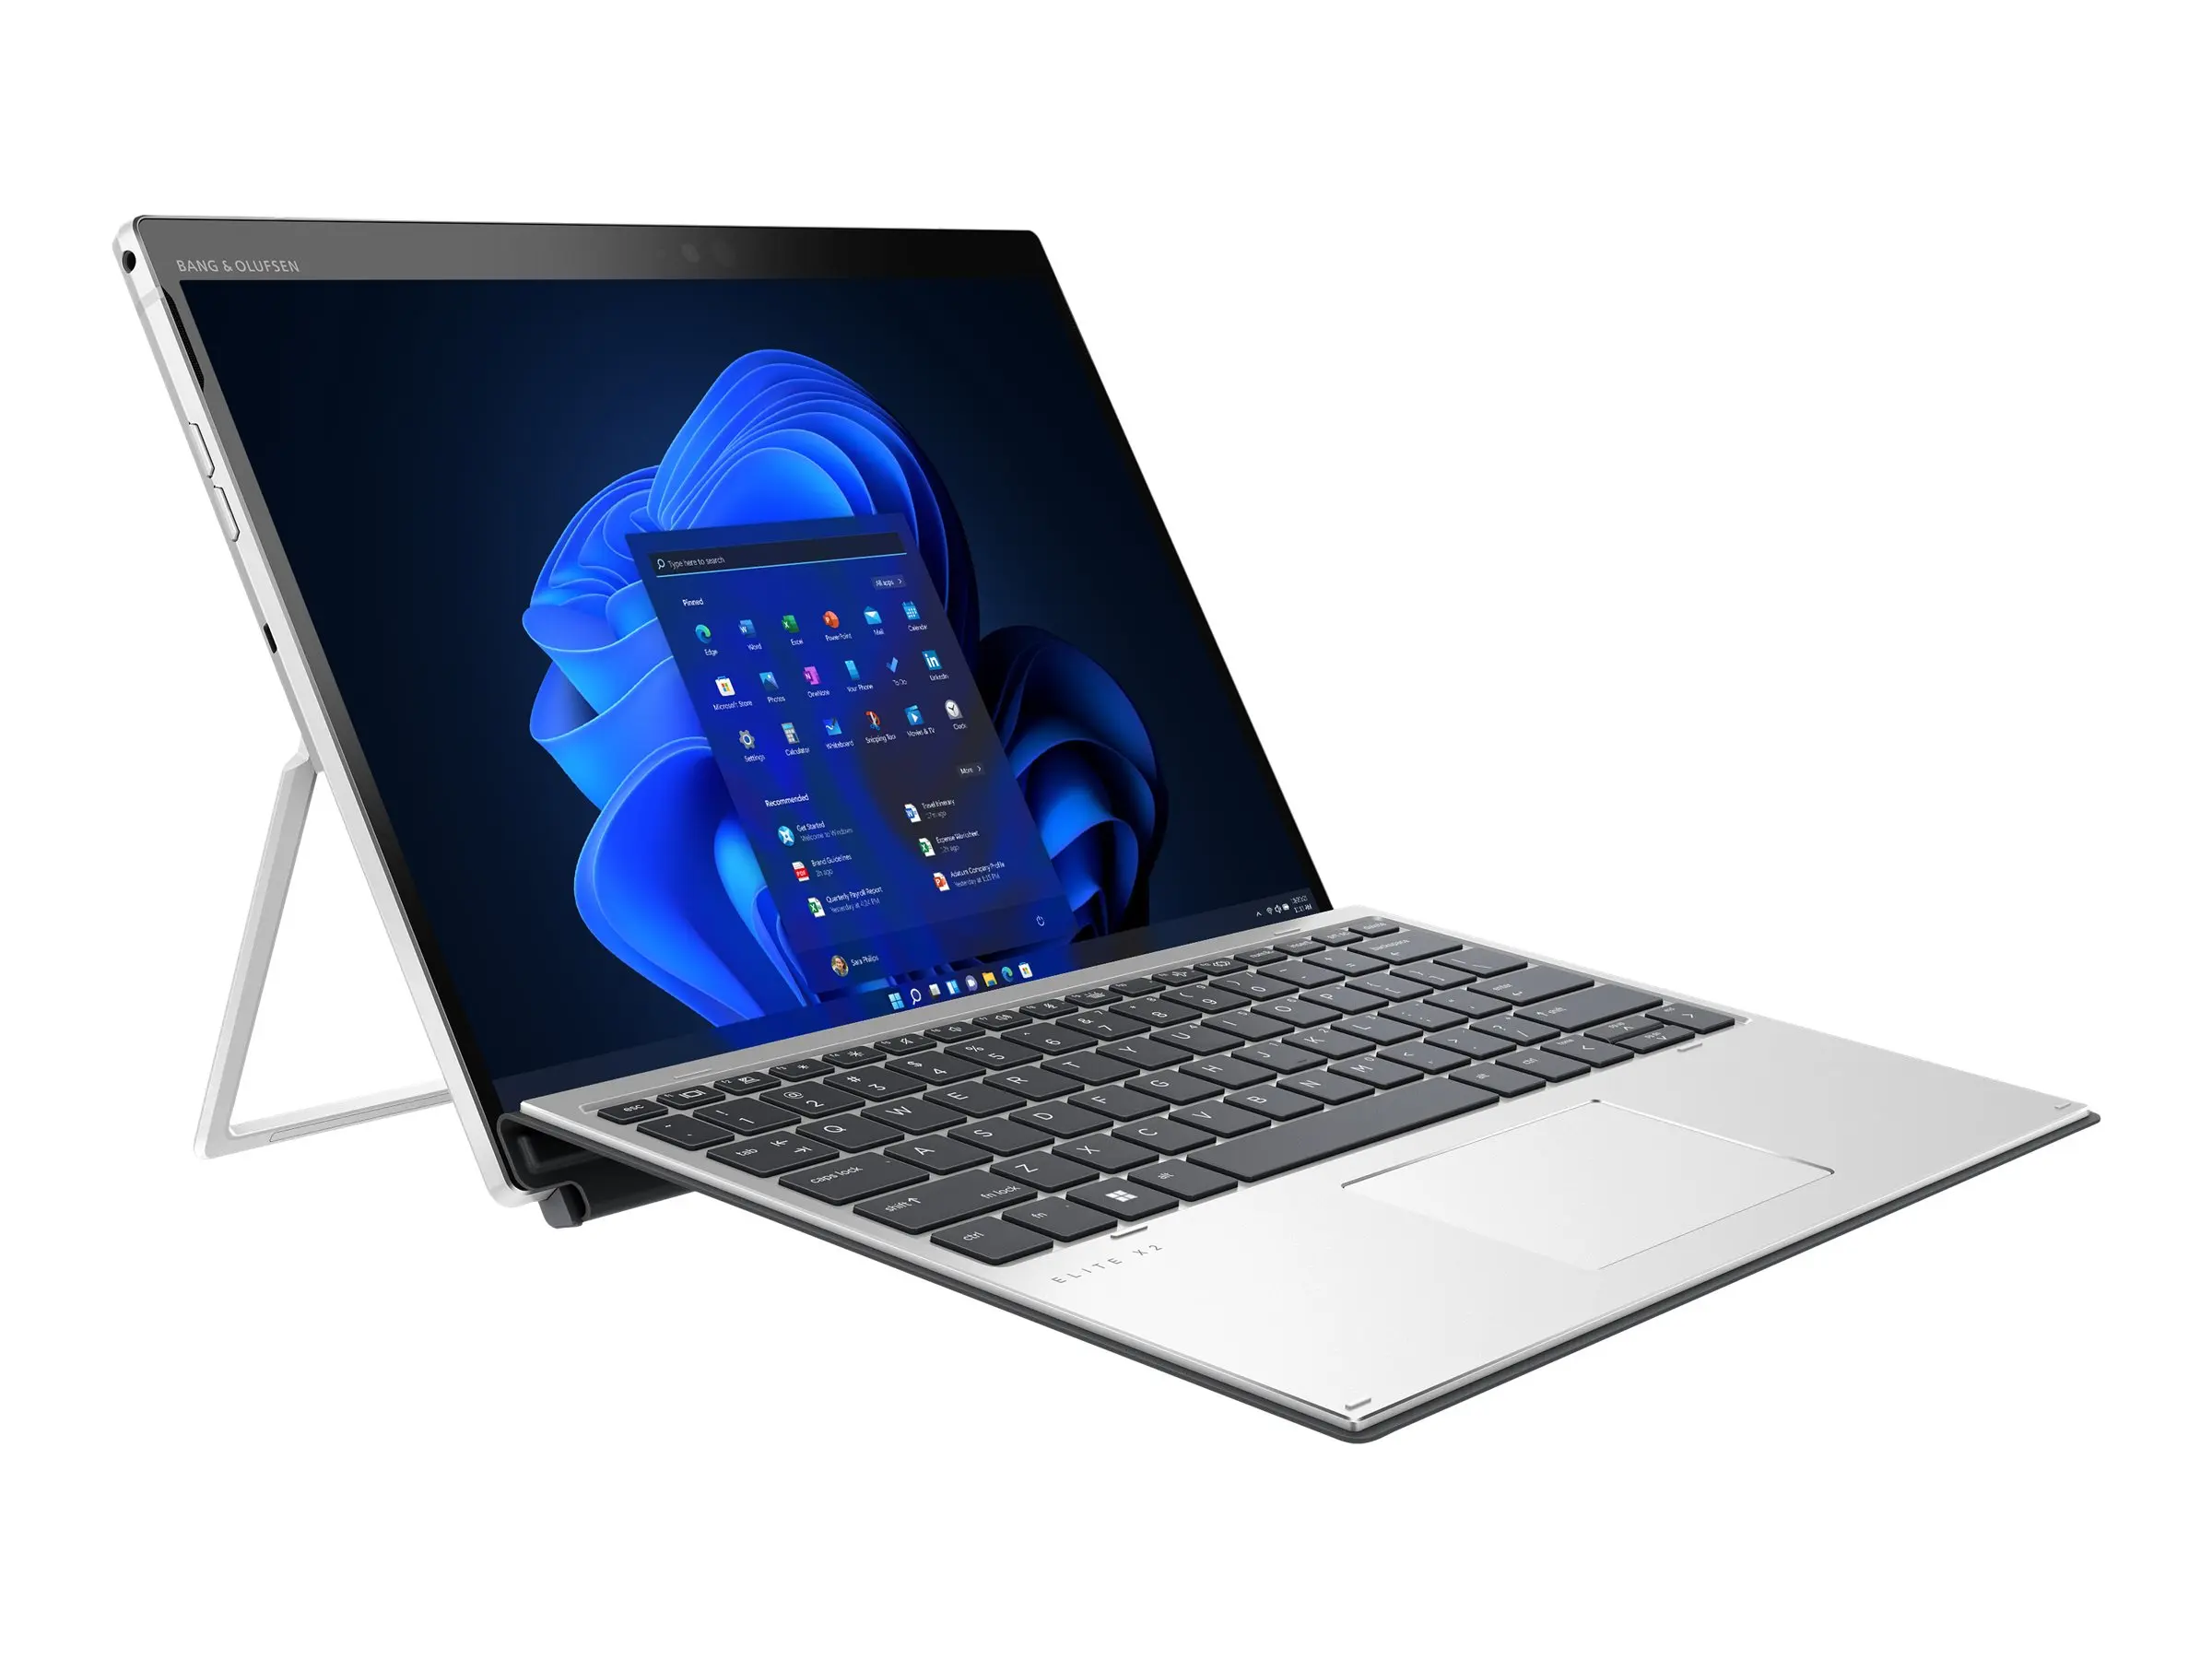 hewlett packard elite x2 tablet - Is HP Elite X2 a laptop or tablet